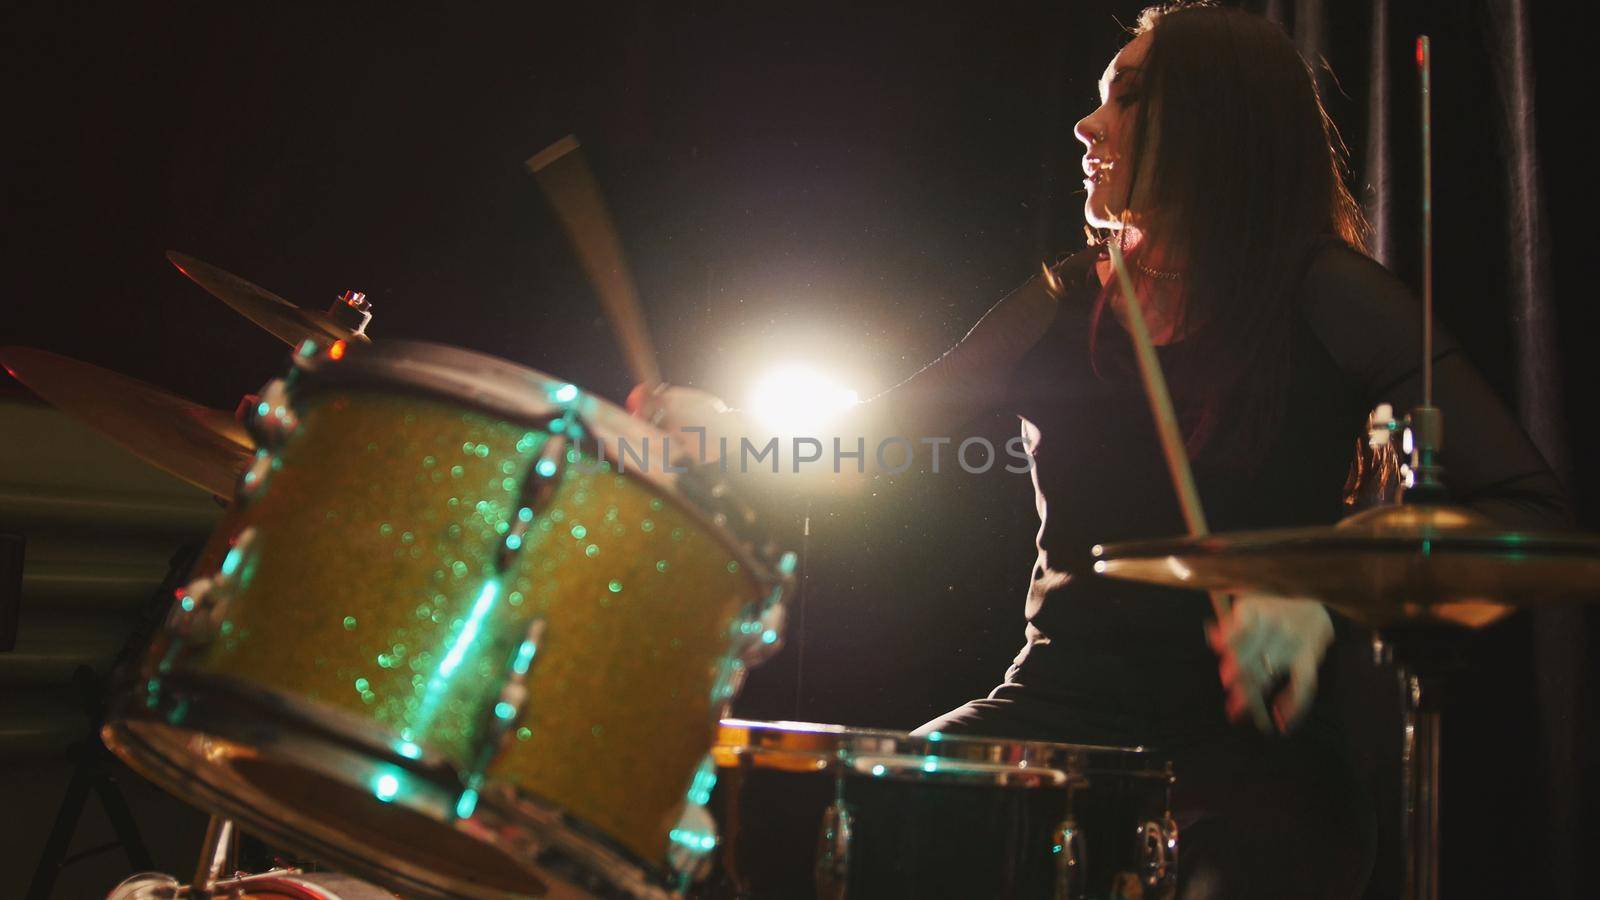 Gothic black hair girl percussion drummer perform music break down - teen rock music, telephoto